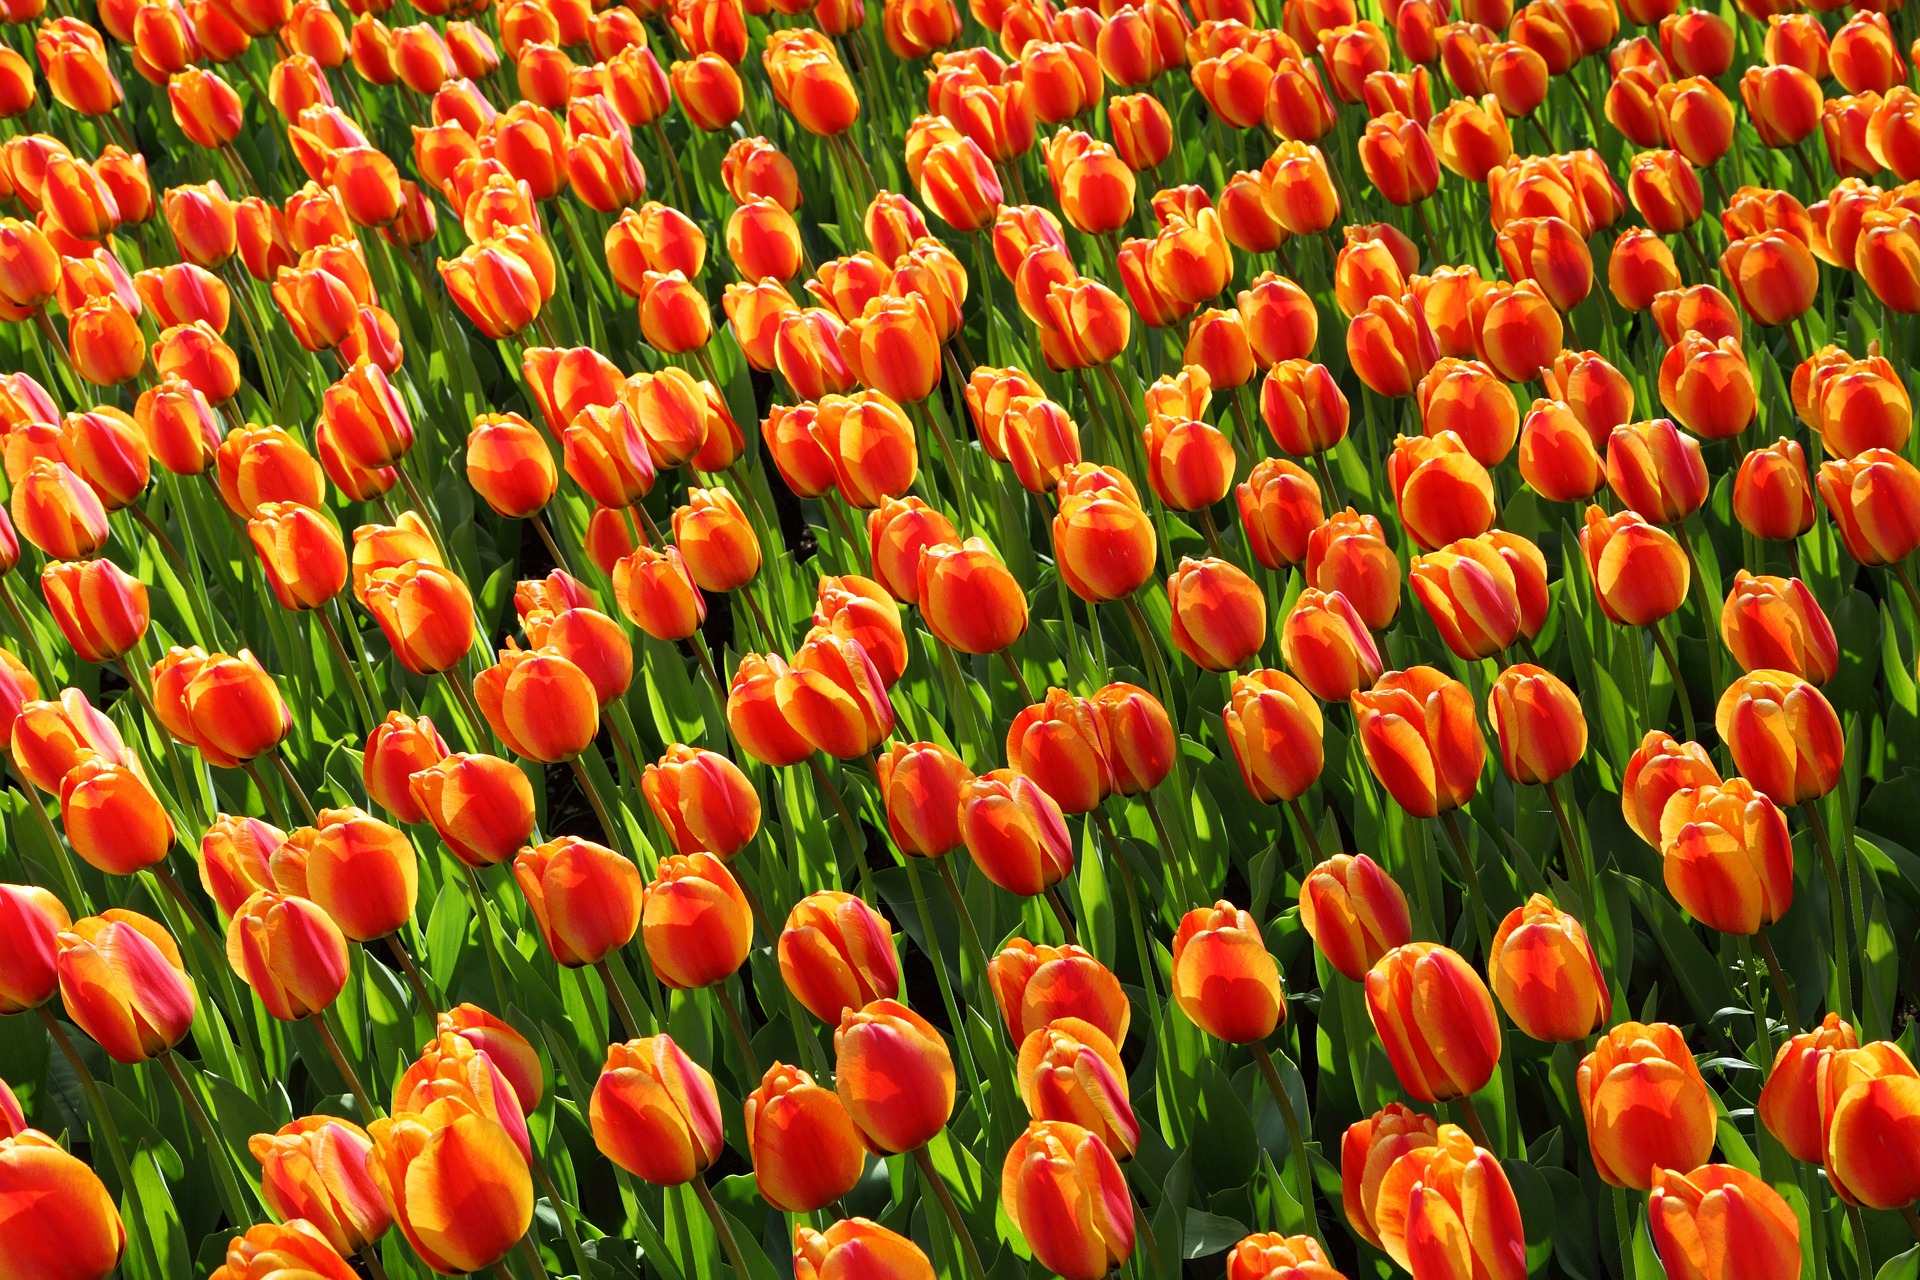 Tulip flowers photo